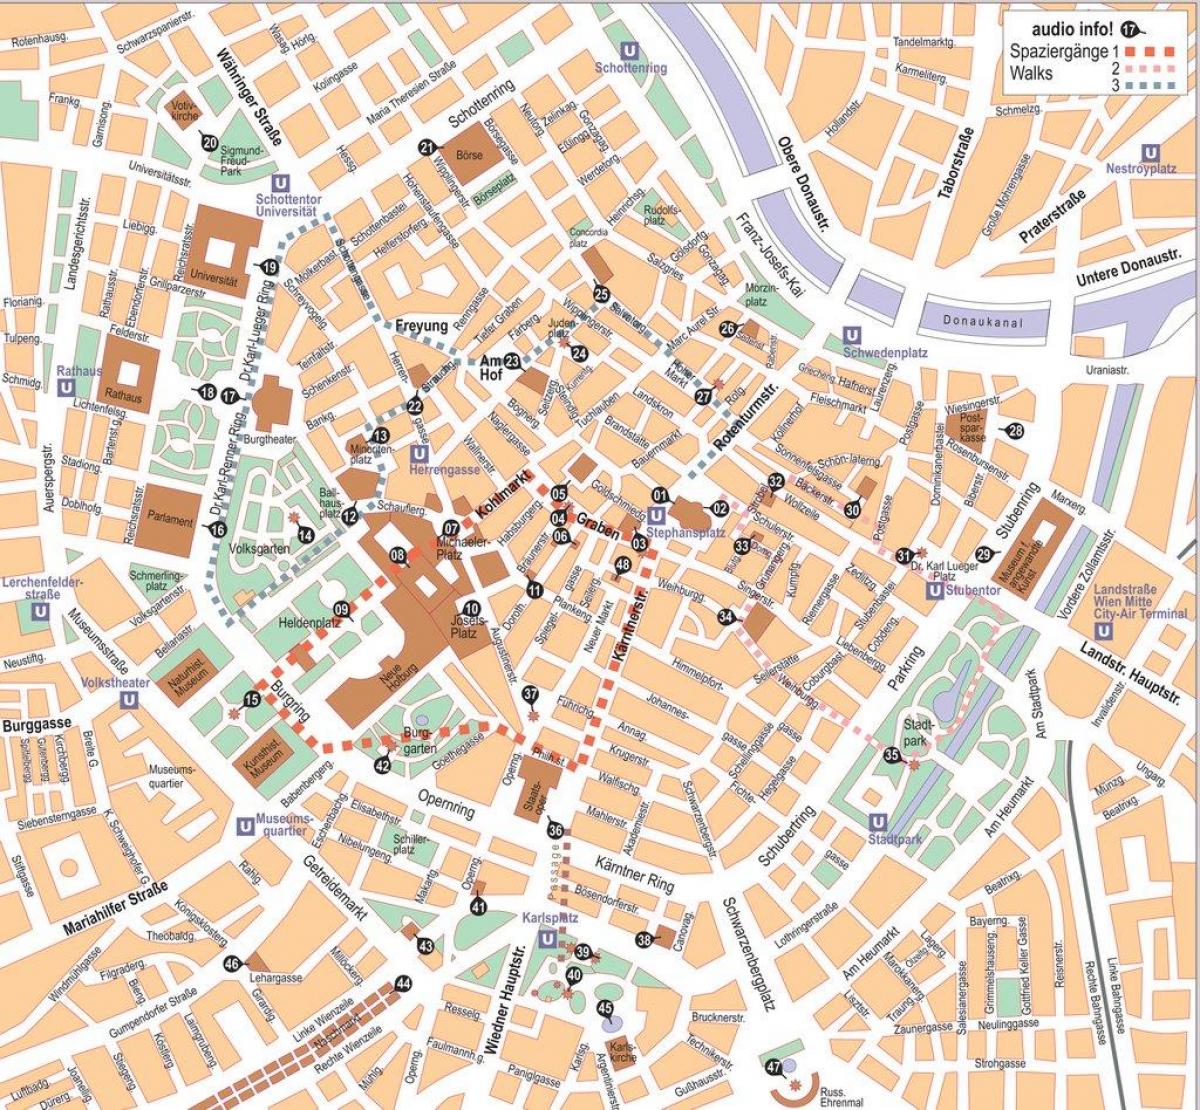 Mapa Wiednia offline miasta